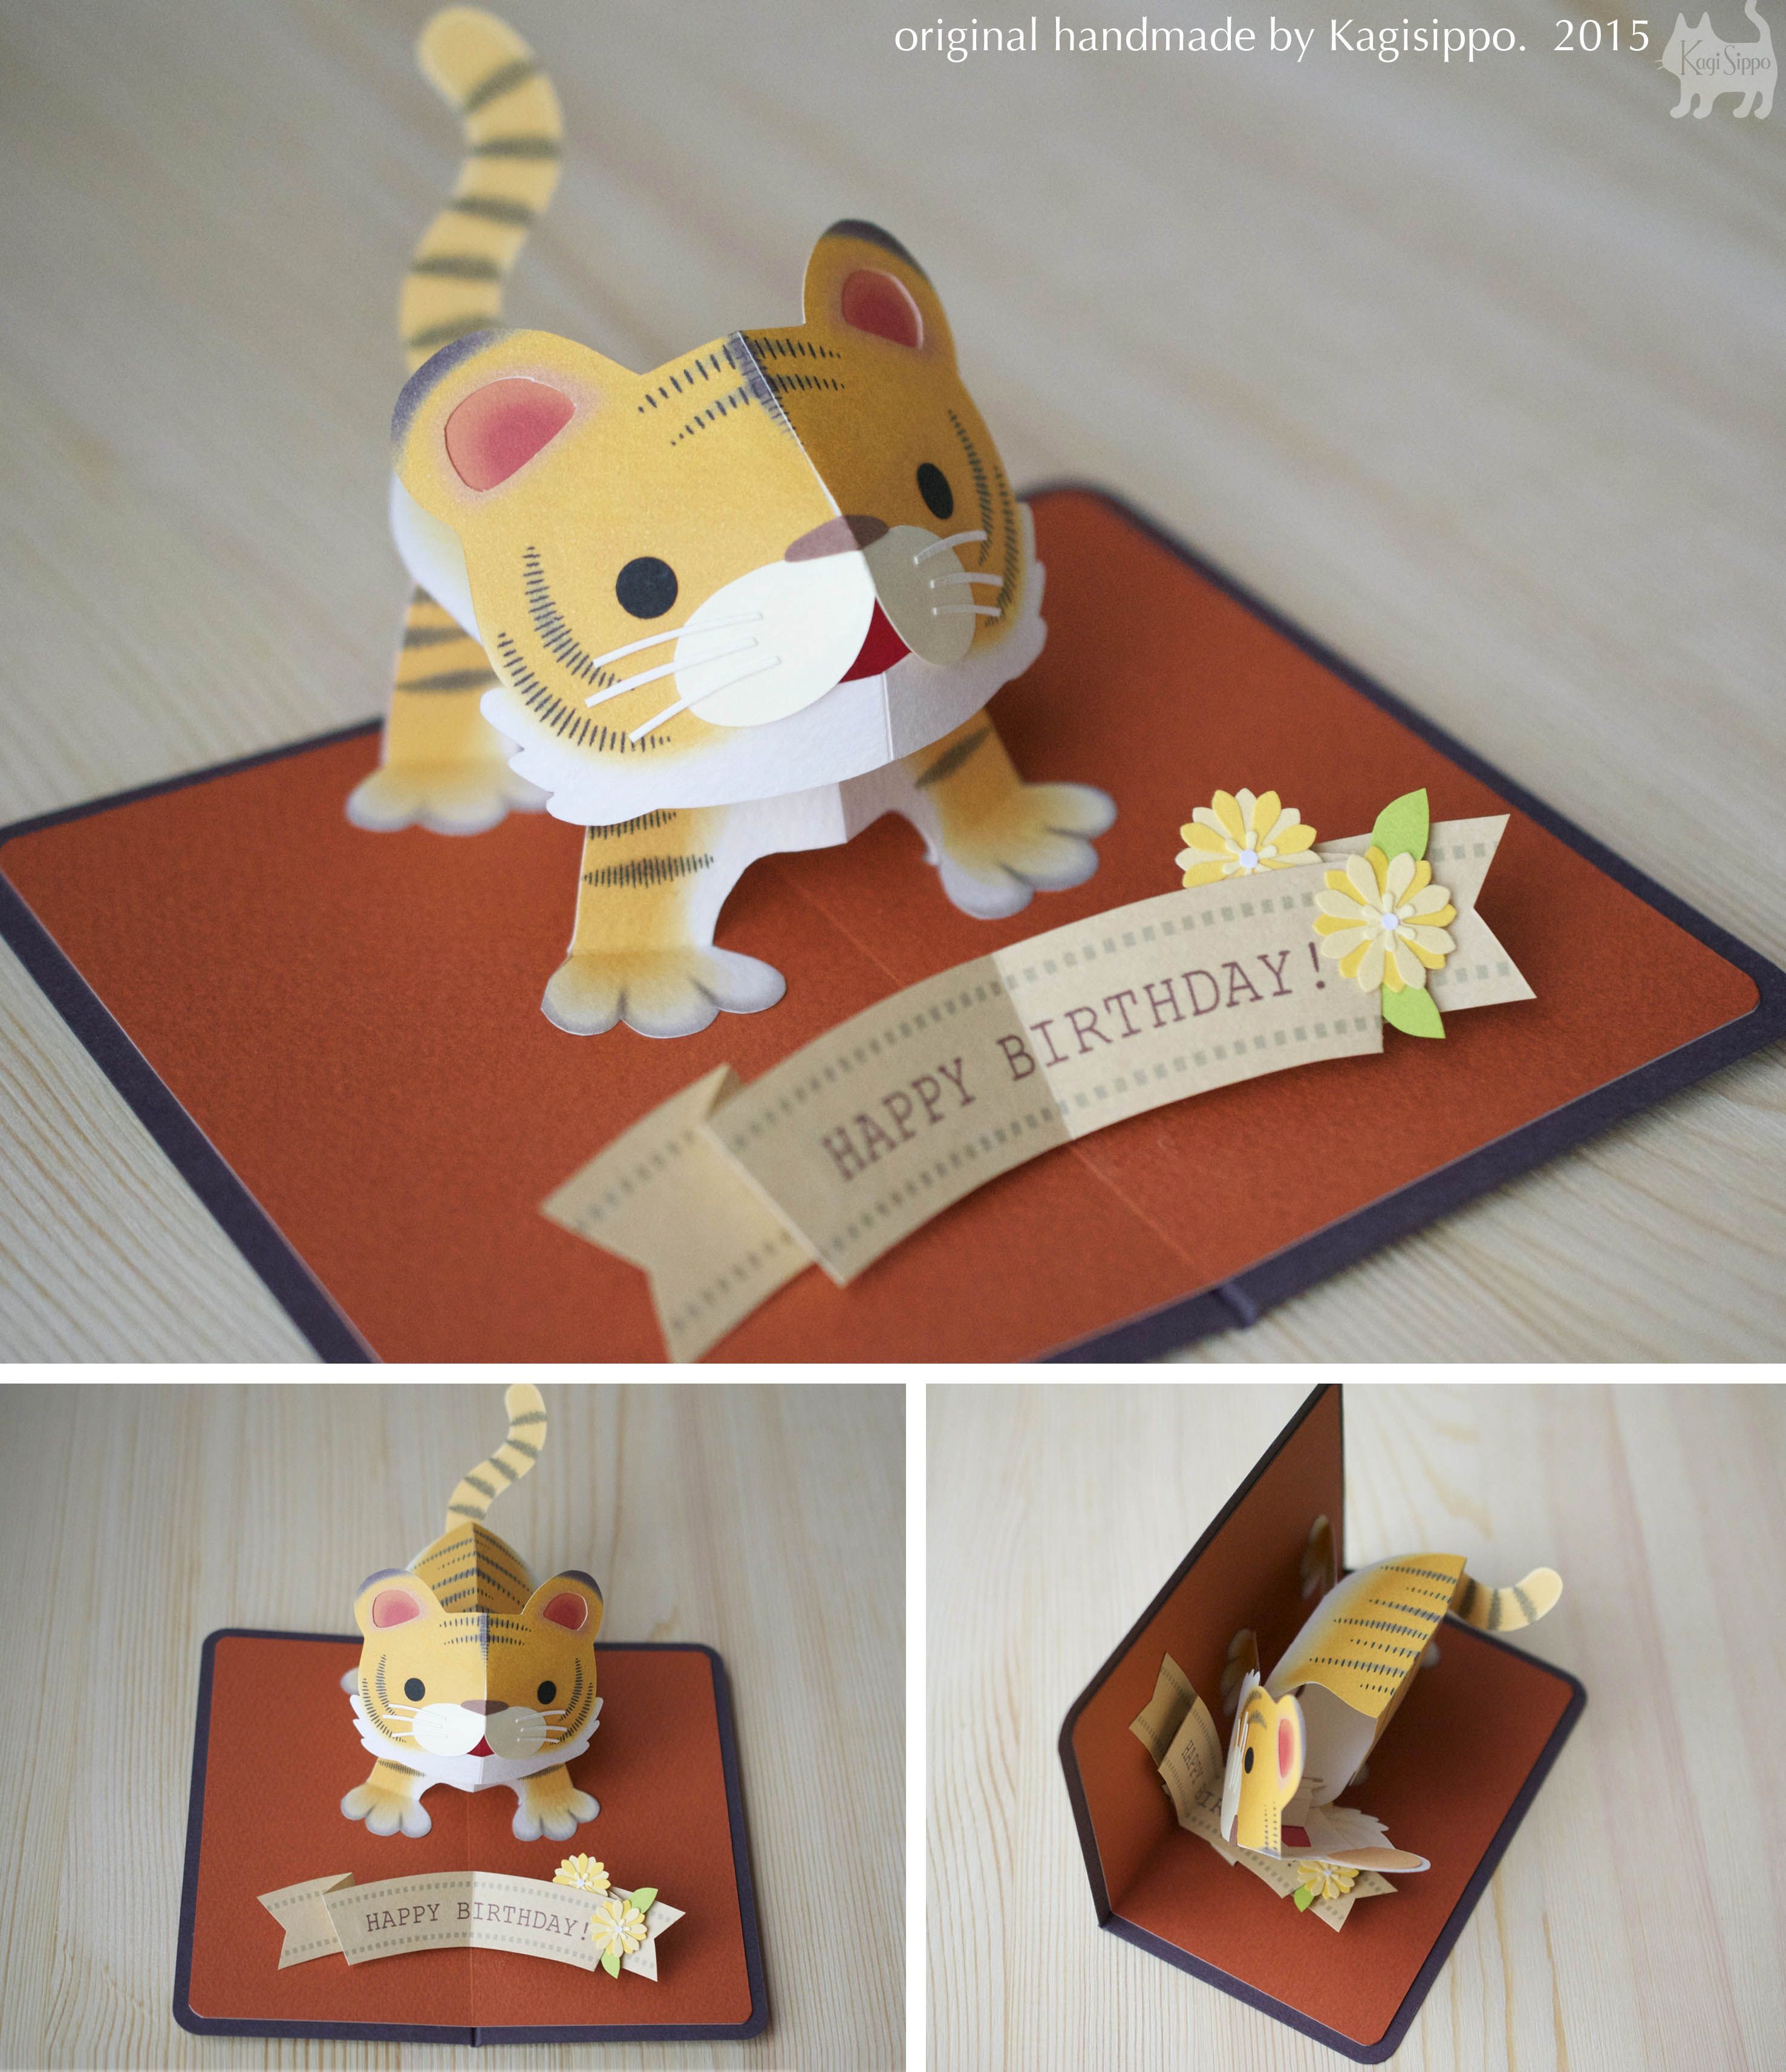 Papercraft Tiger Pop Up Birthdaycard [tiger] original Handmade by Kagisippo